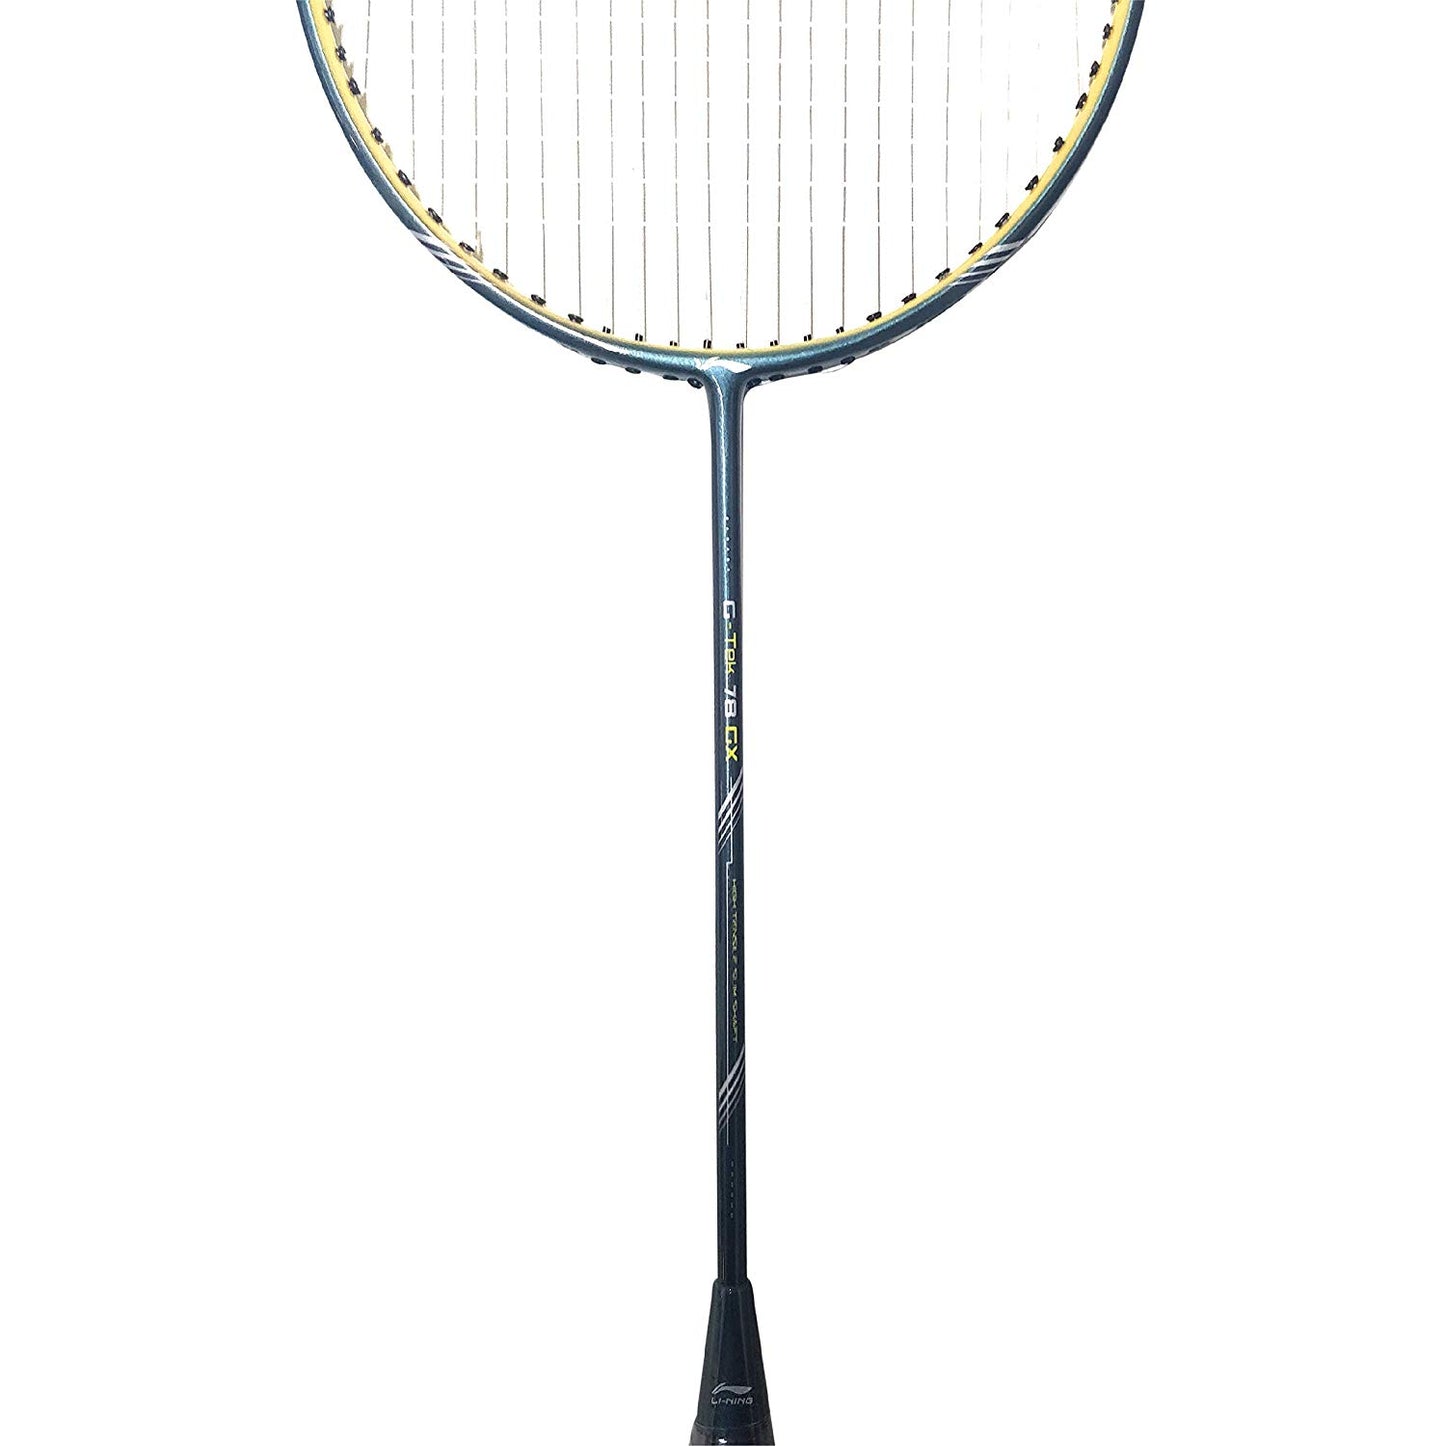 Li-Ning G-TEK 78 GX Graphite Strung Badminton Racquets (Blue/Gold) - Best Price online Prokicksports.com